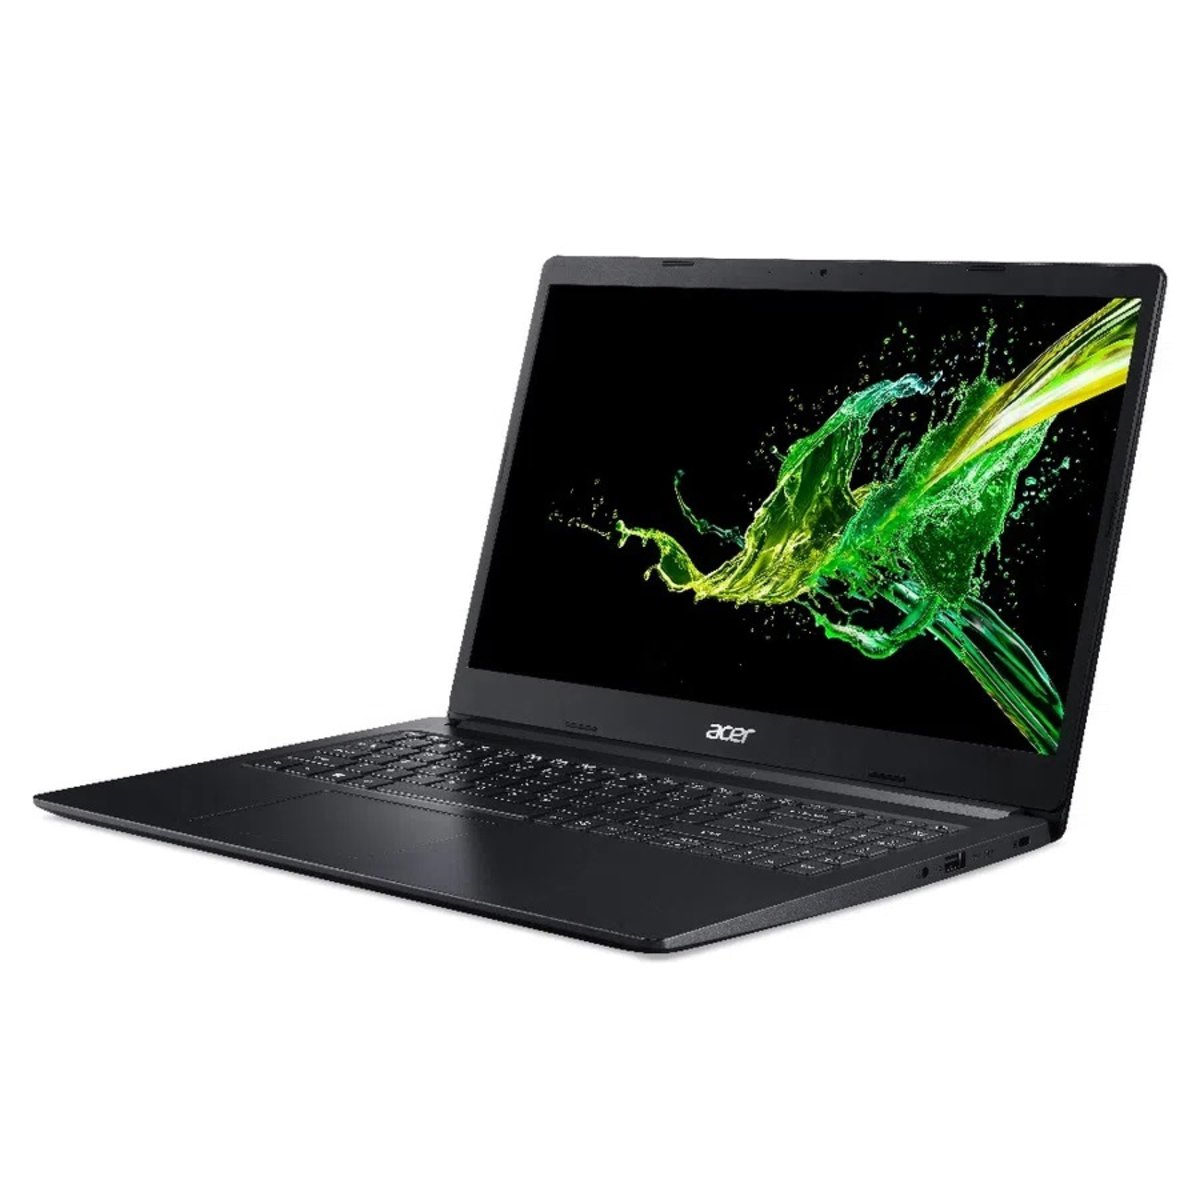 Notebook Acer A315 Intel Celeron N4000 Memoria 4gb Hd 1tb Tela 15.6' Hd Windows 10 Pro Outlet